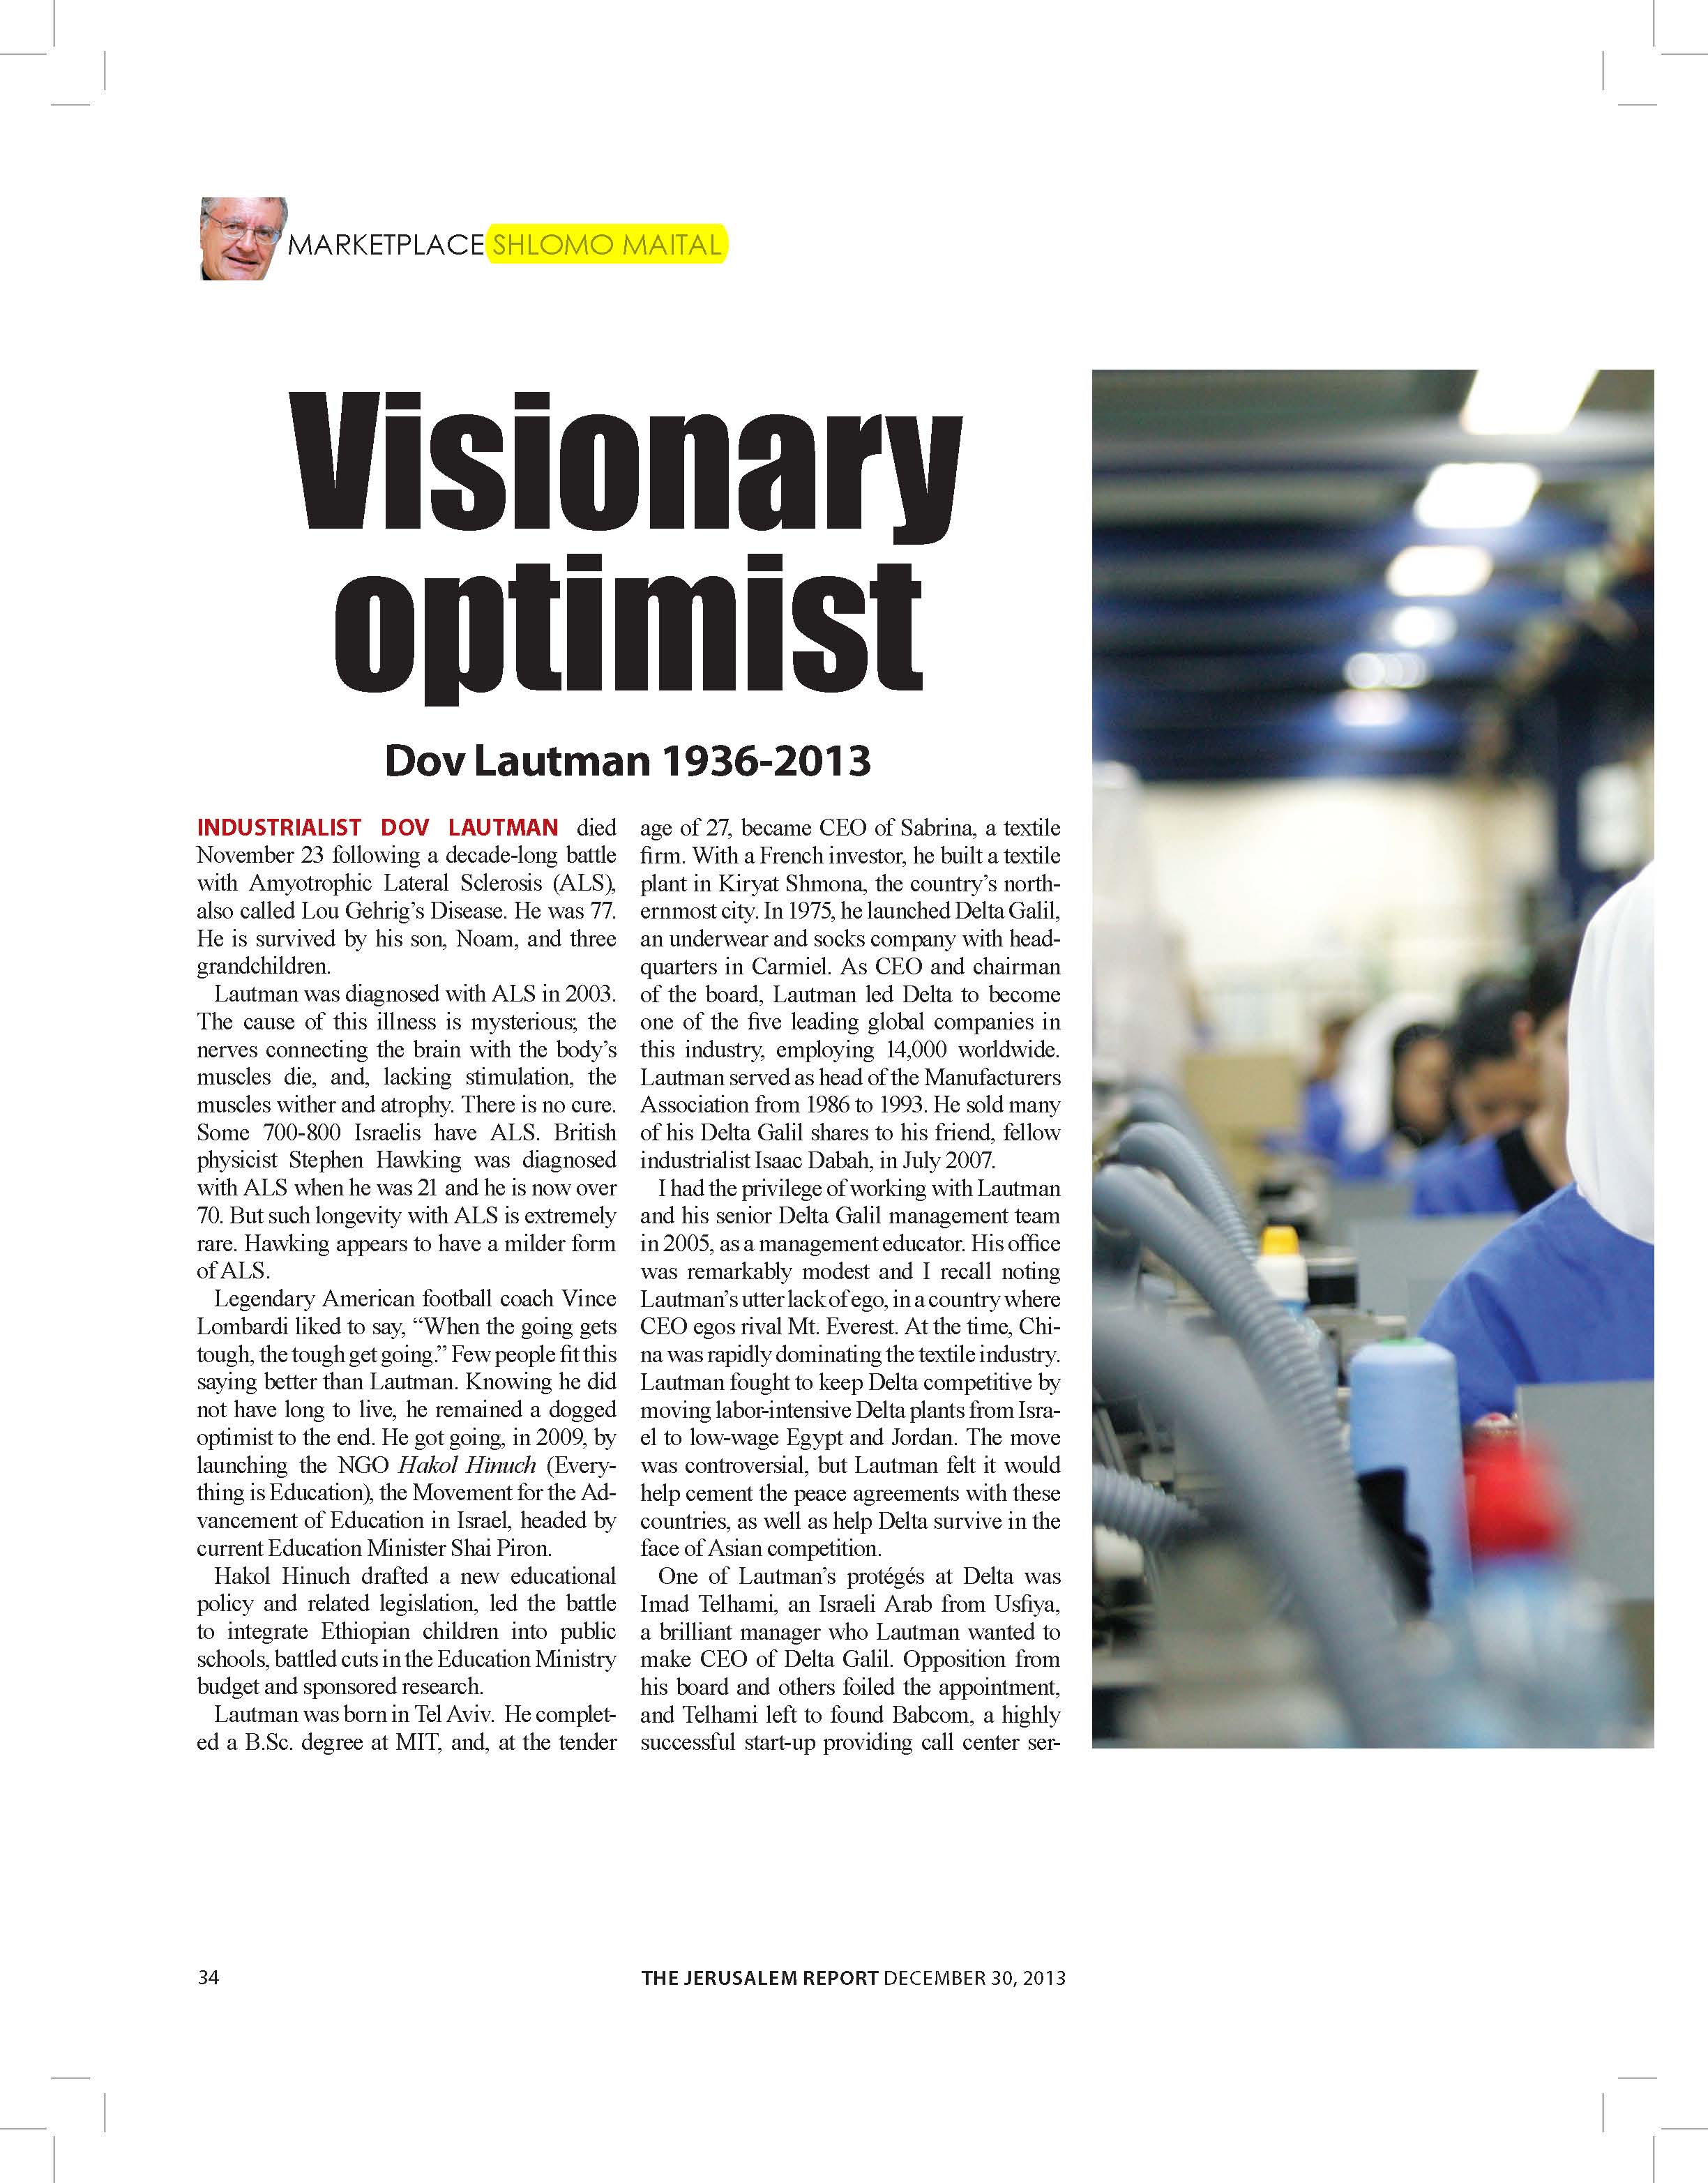 Visionary optimist - Dov Lautman 1936-2013